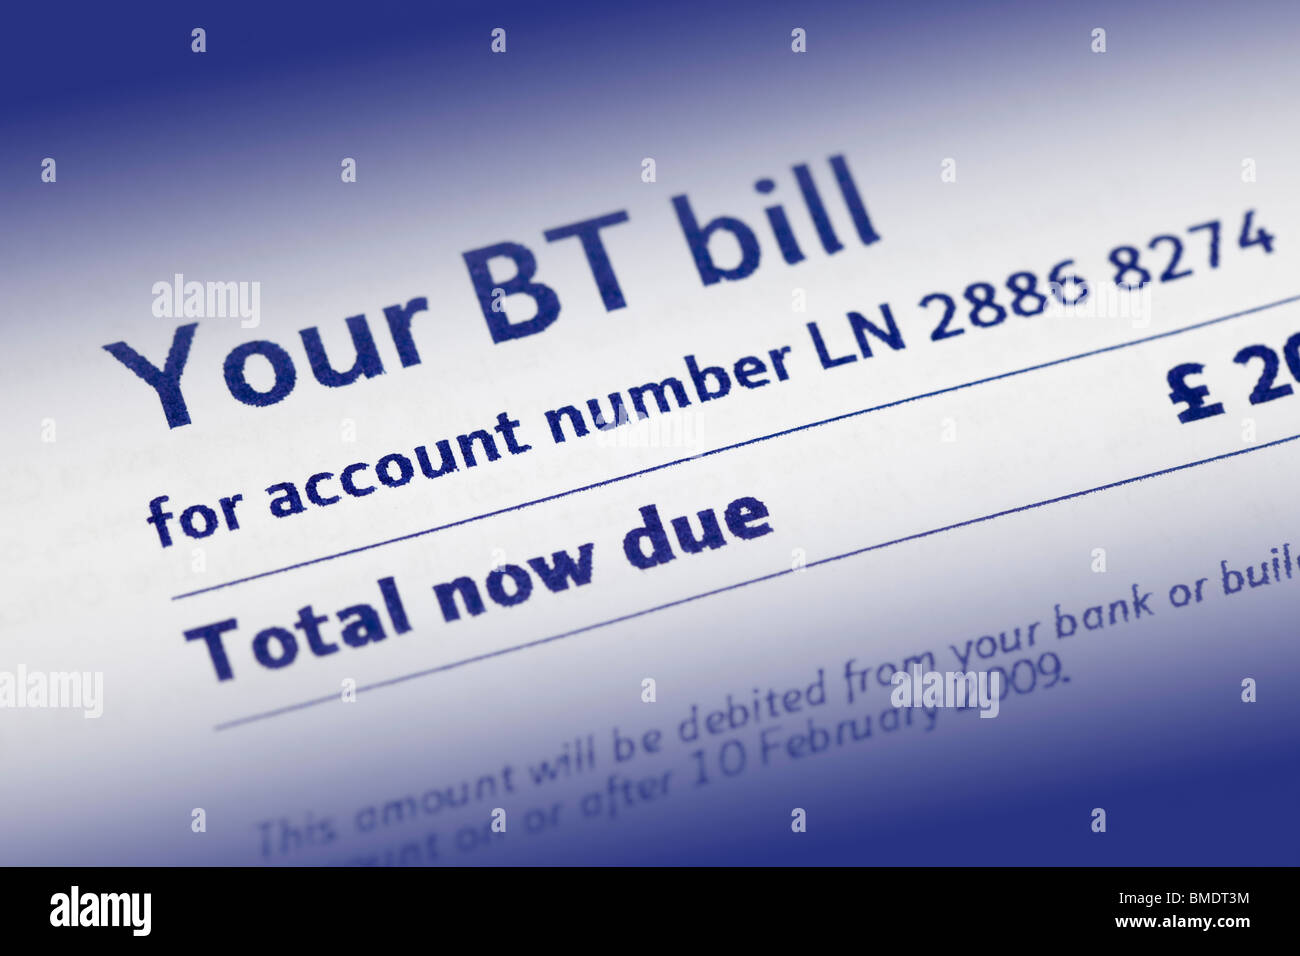 a Bt telephone bill Stock Photo